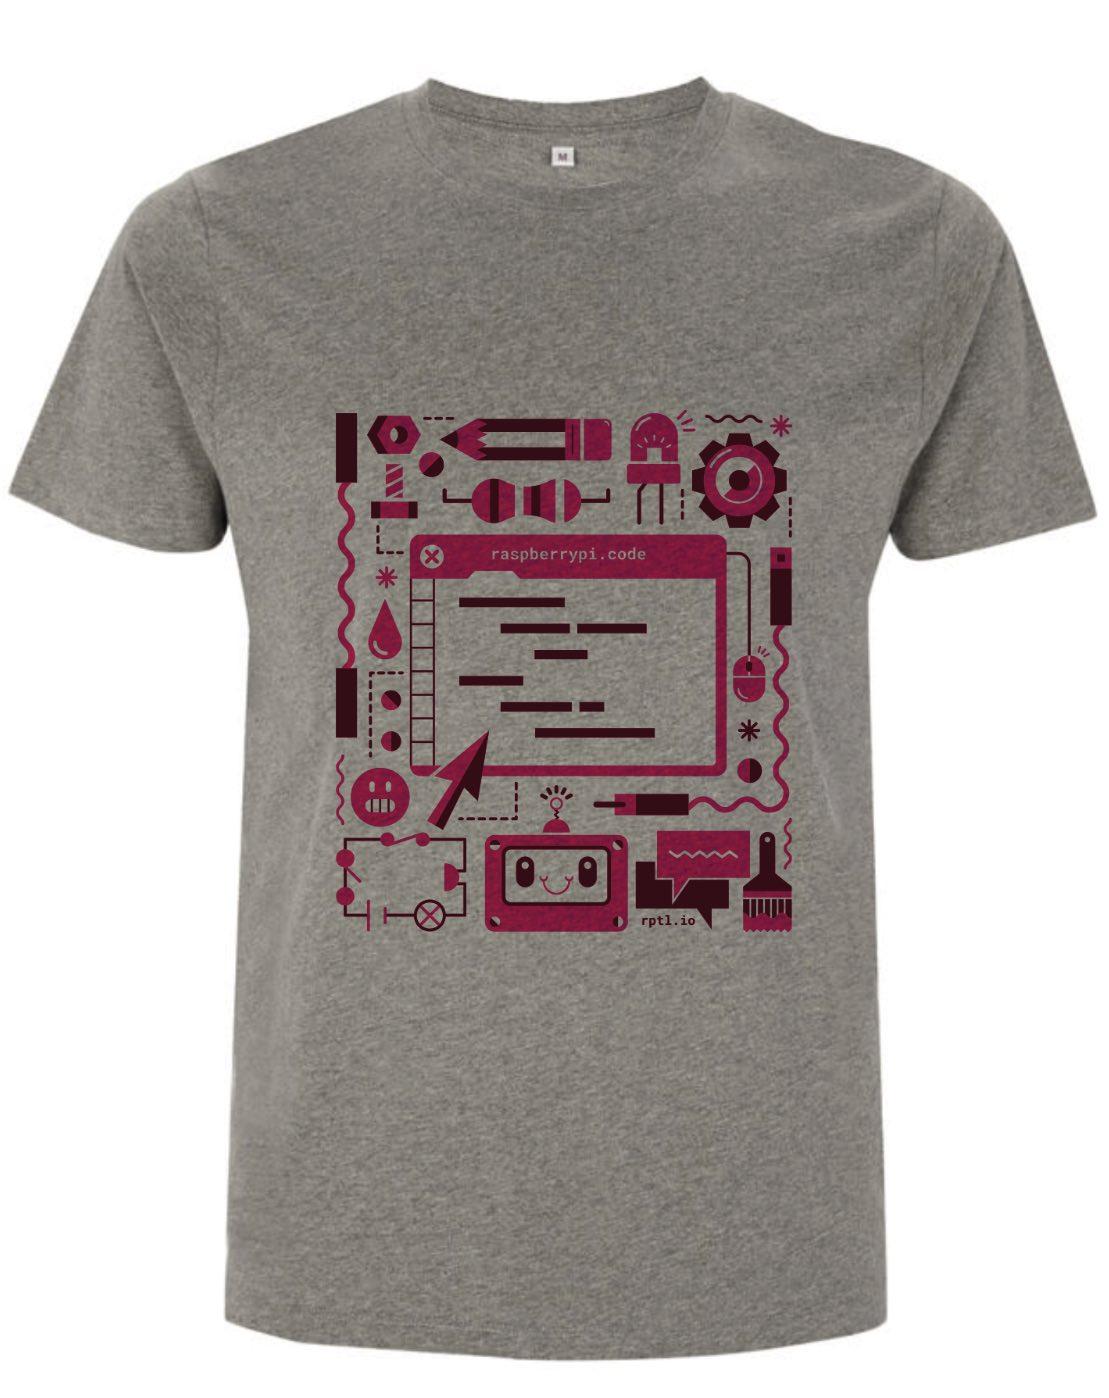 Raspberry Pi T-Shirt "Coding" S-XXL